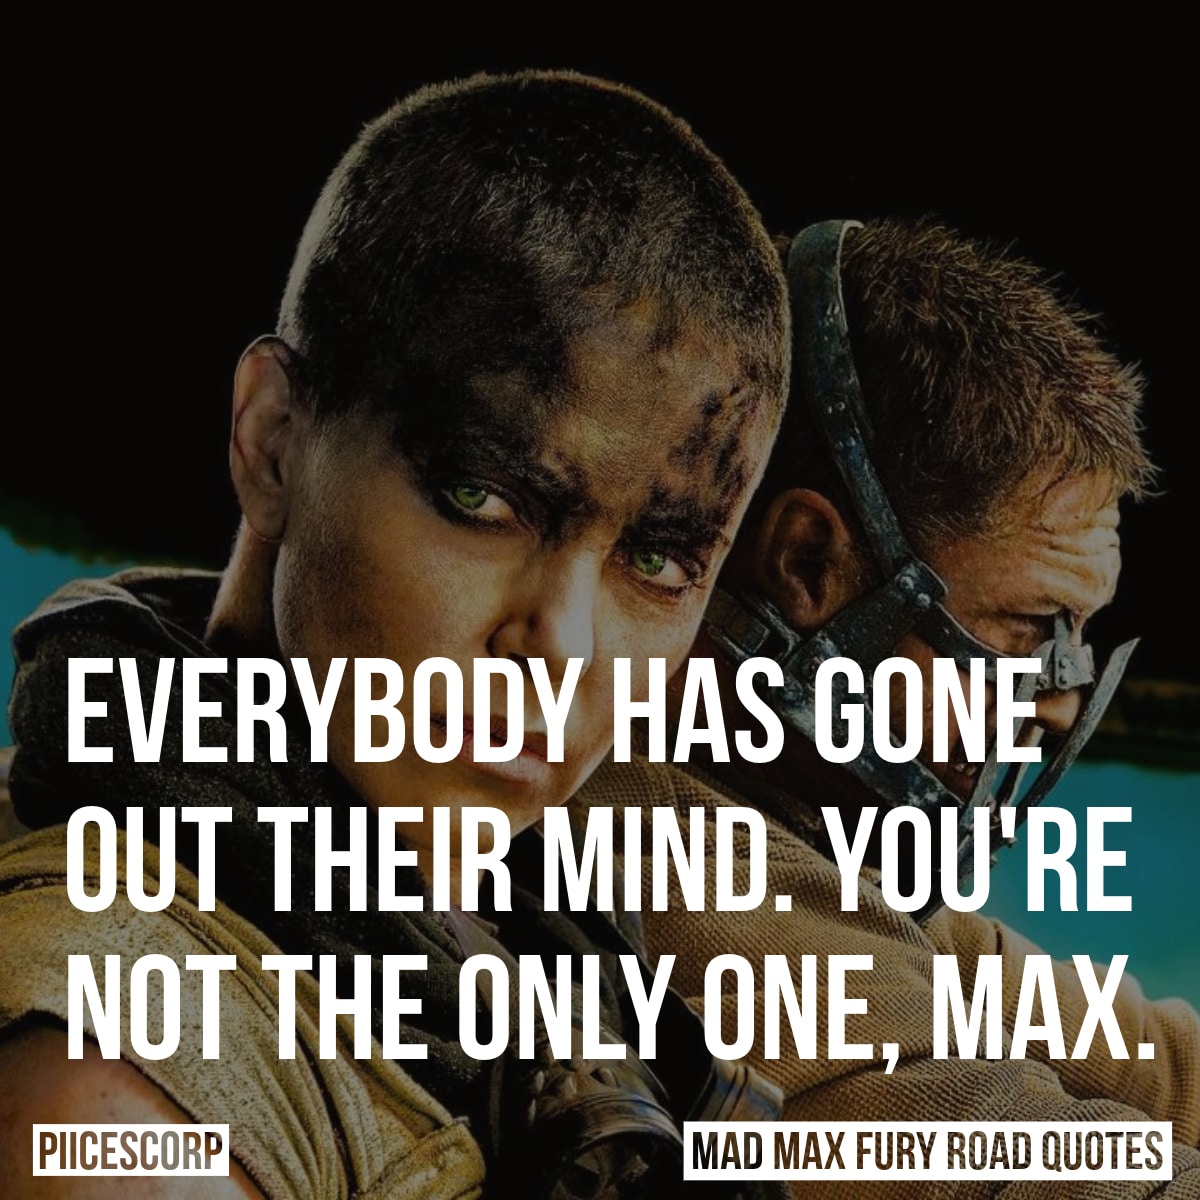 Mad MAx Fury road quotes